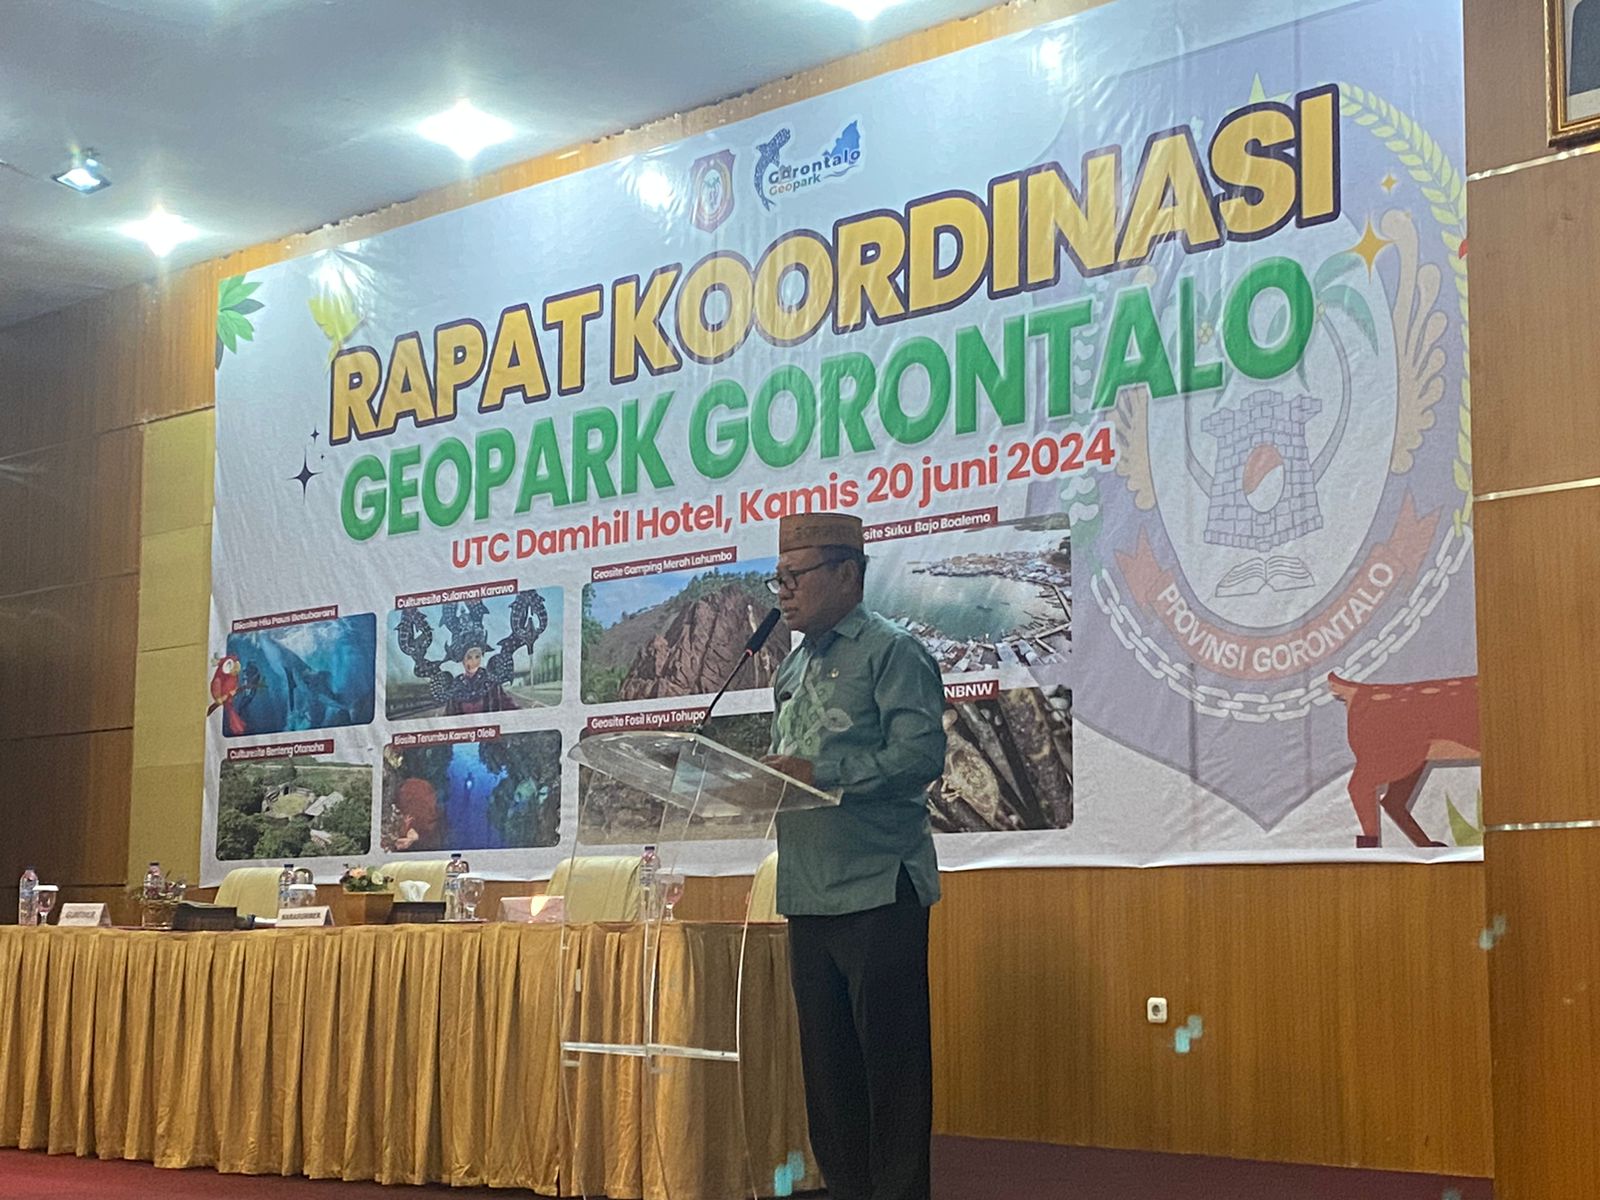  Plt Asisten III Ajak Stakeholder Jaga Masa Depan Geopark Gorontalo 